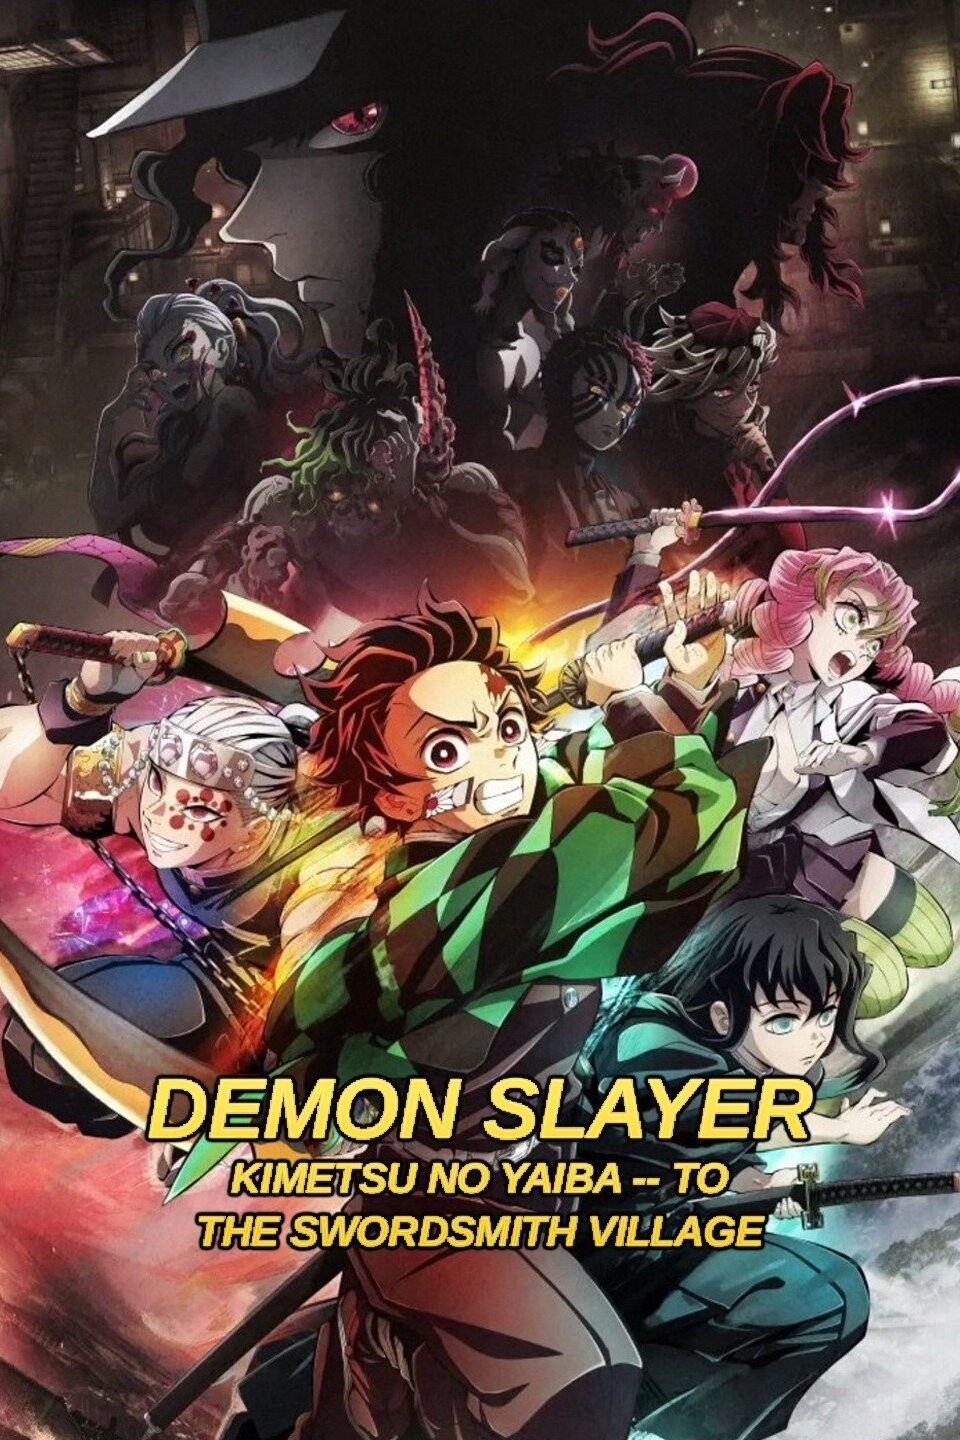 Demon Slayer: Kimetsu no Yaiba - To the Swordsmith Village is